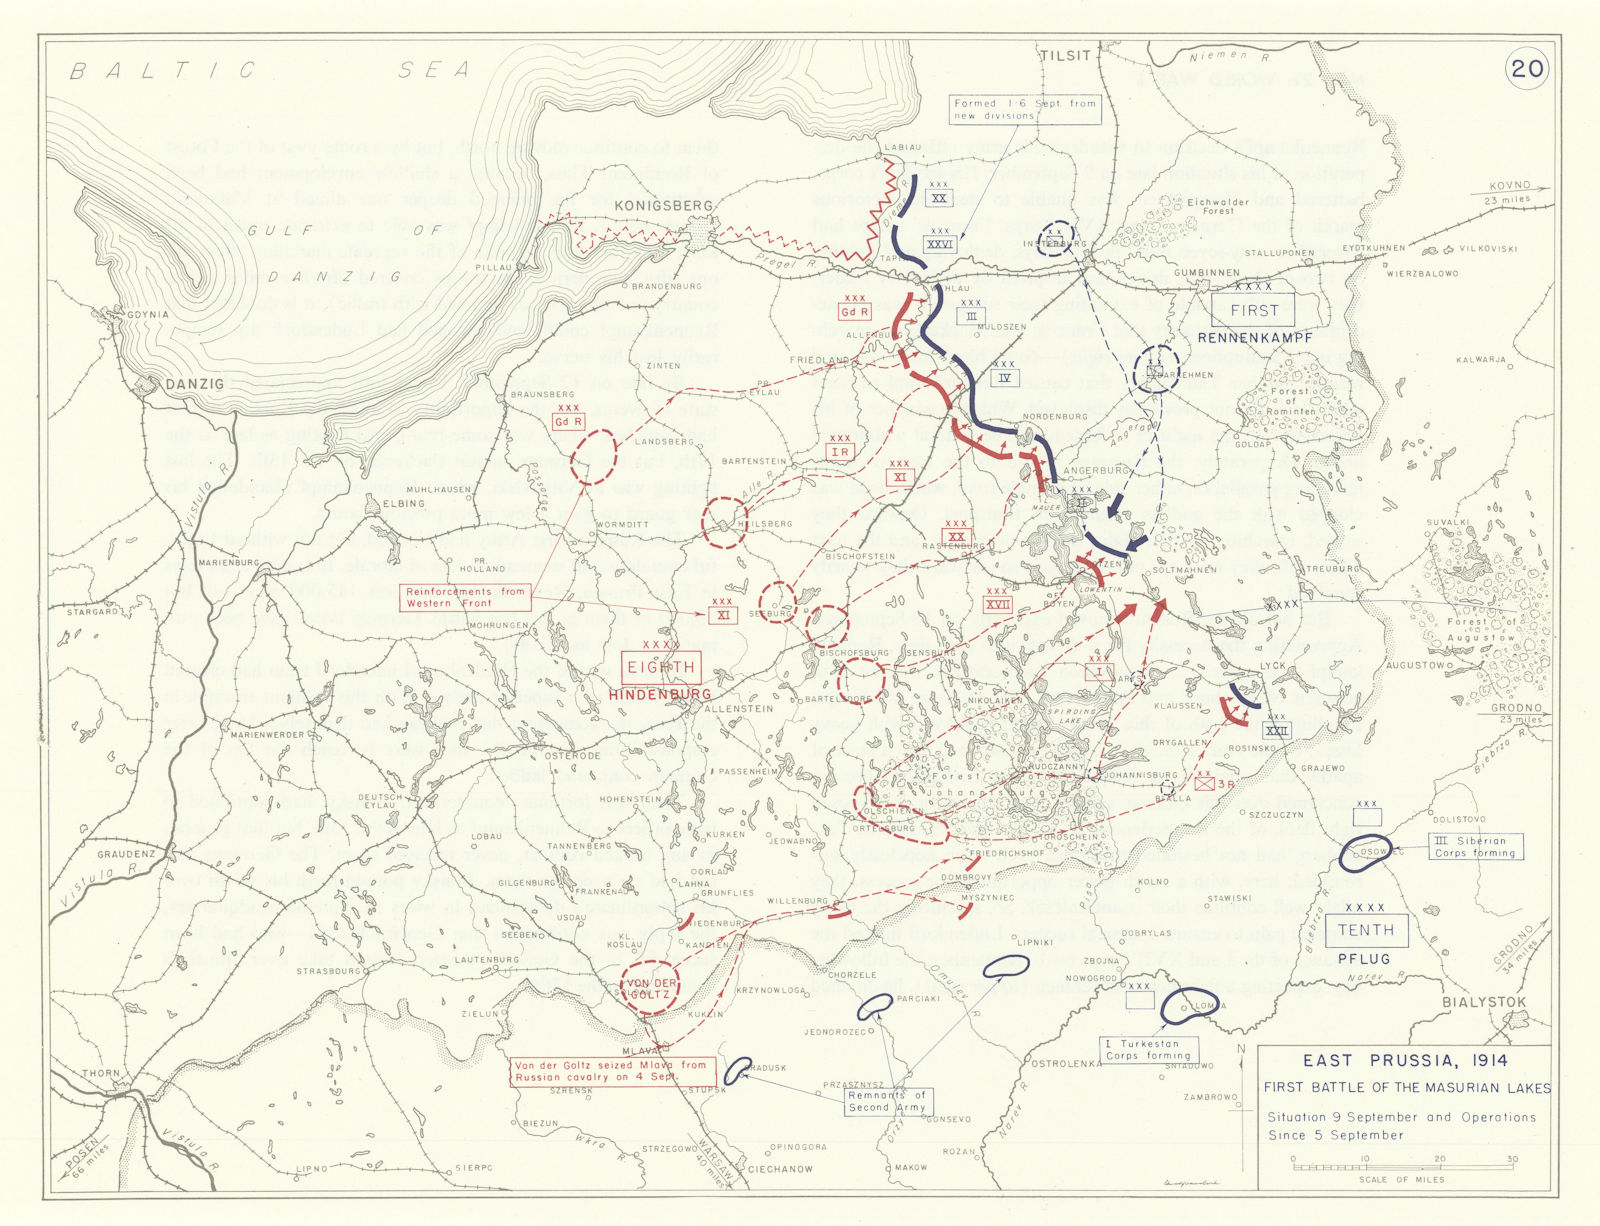 World War 1. East Prussia 5-9 September 1914. Masurian Lakes 1st Battle 1959 map